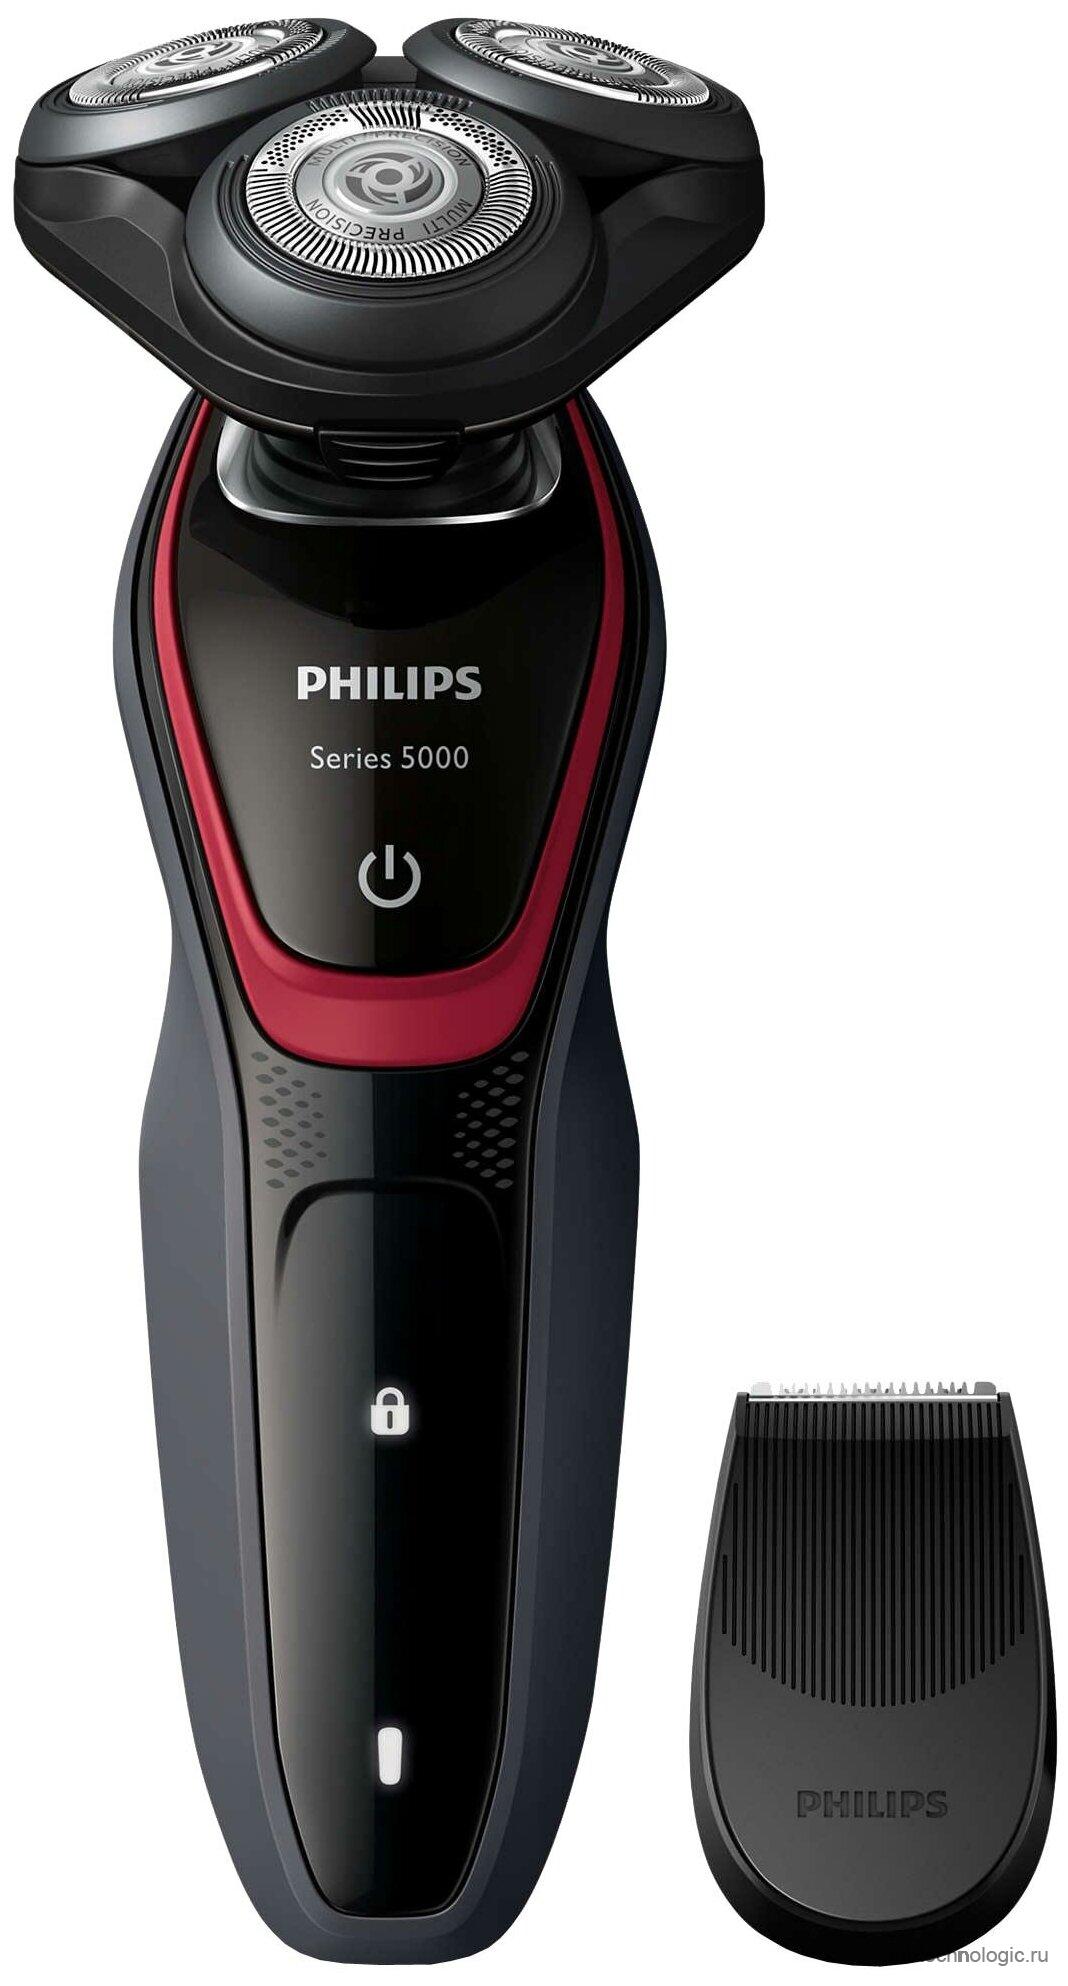 Philips S5130 Series 5000